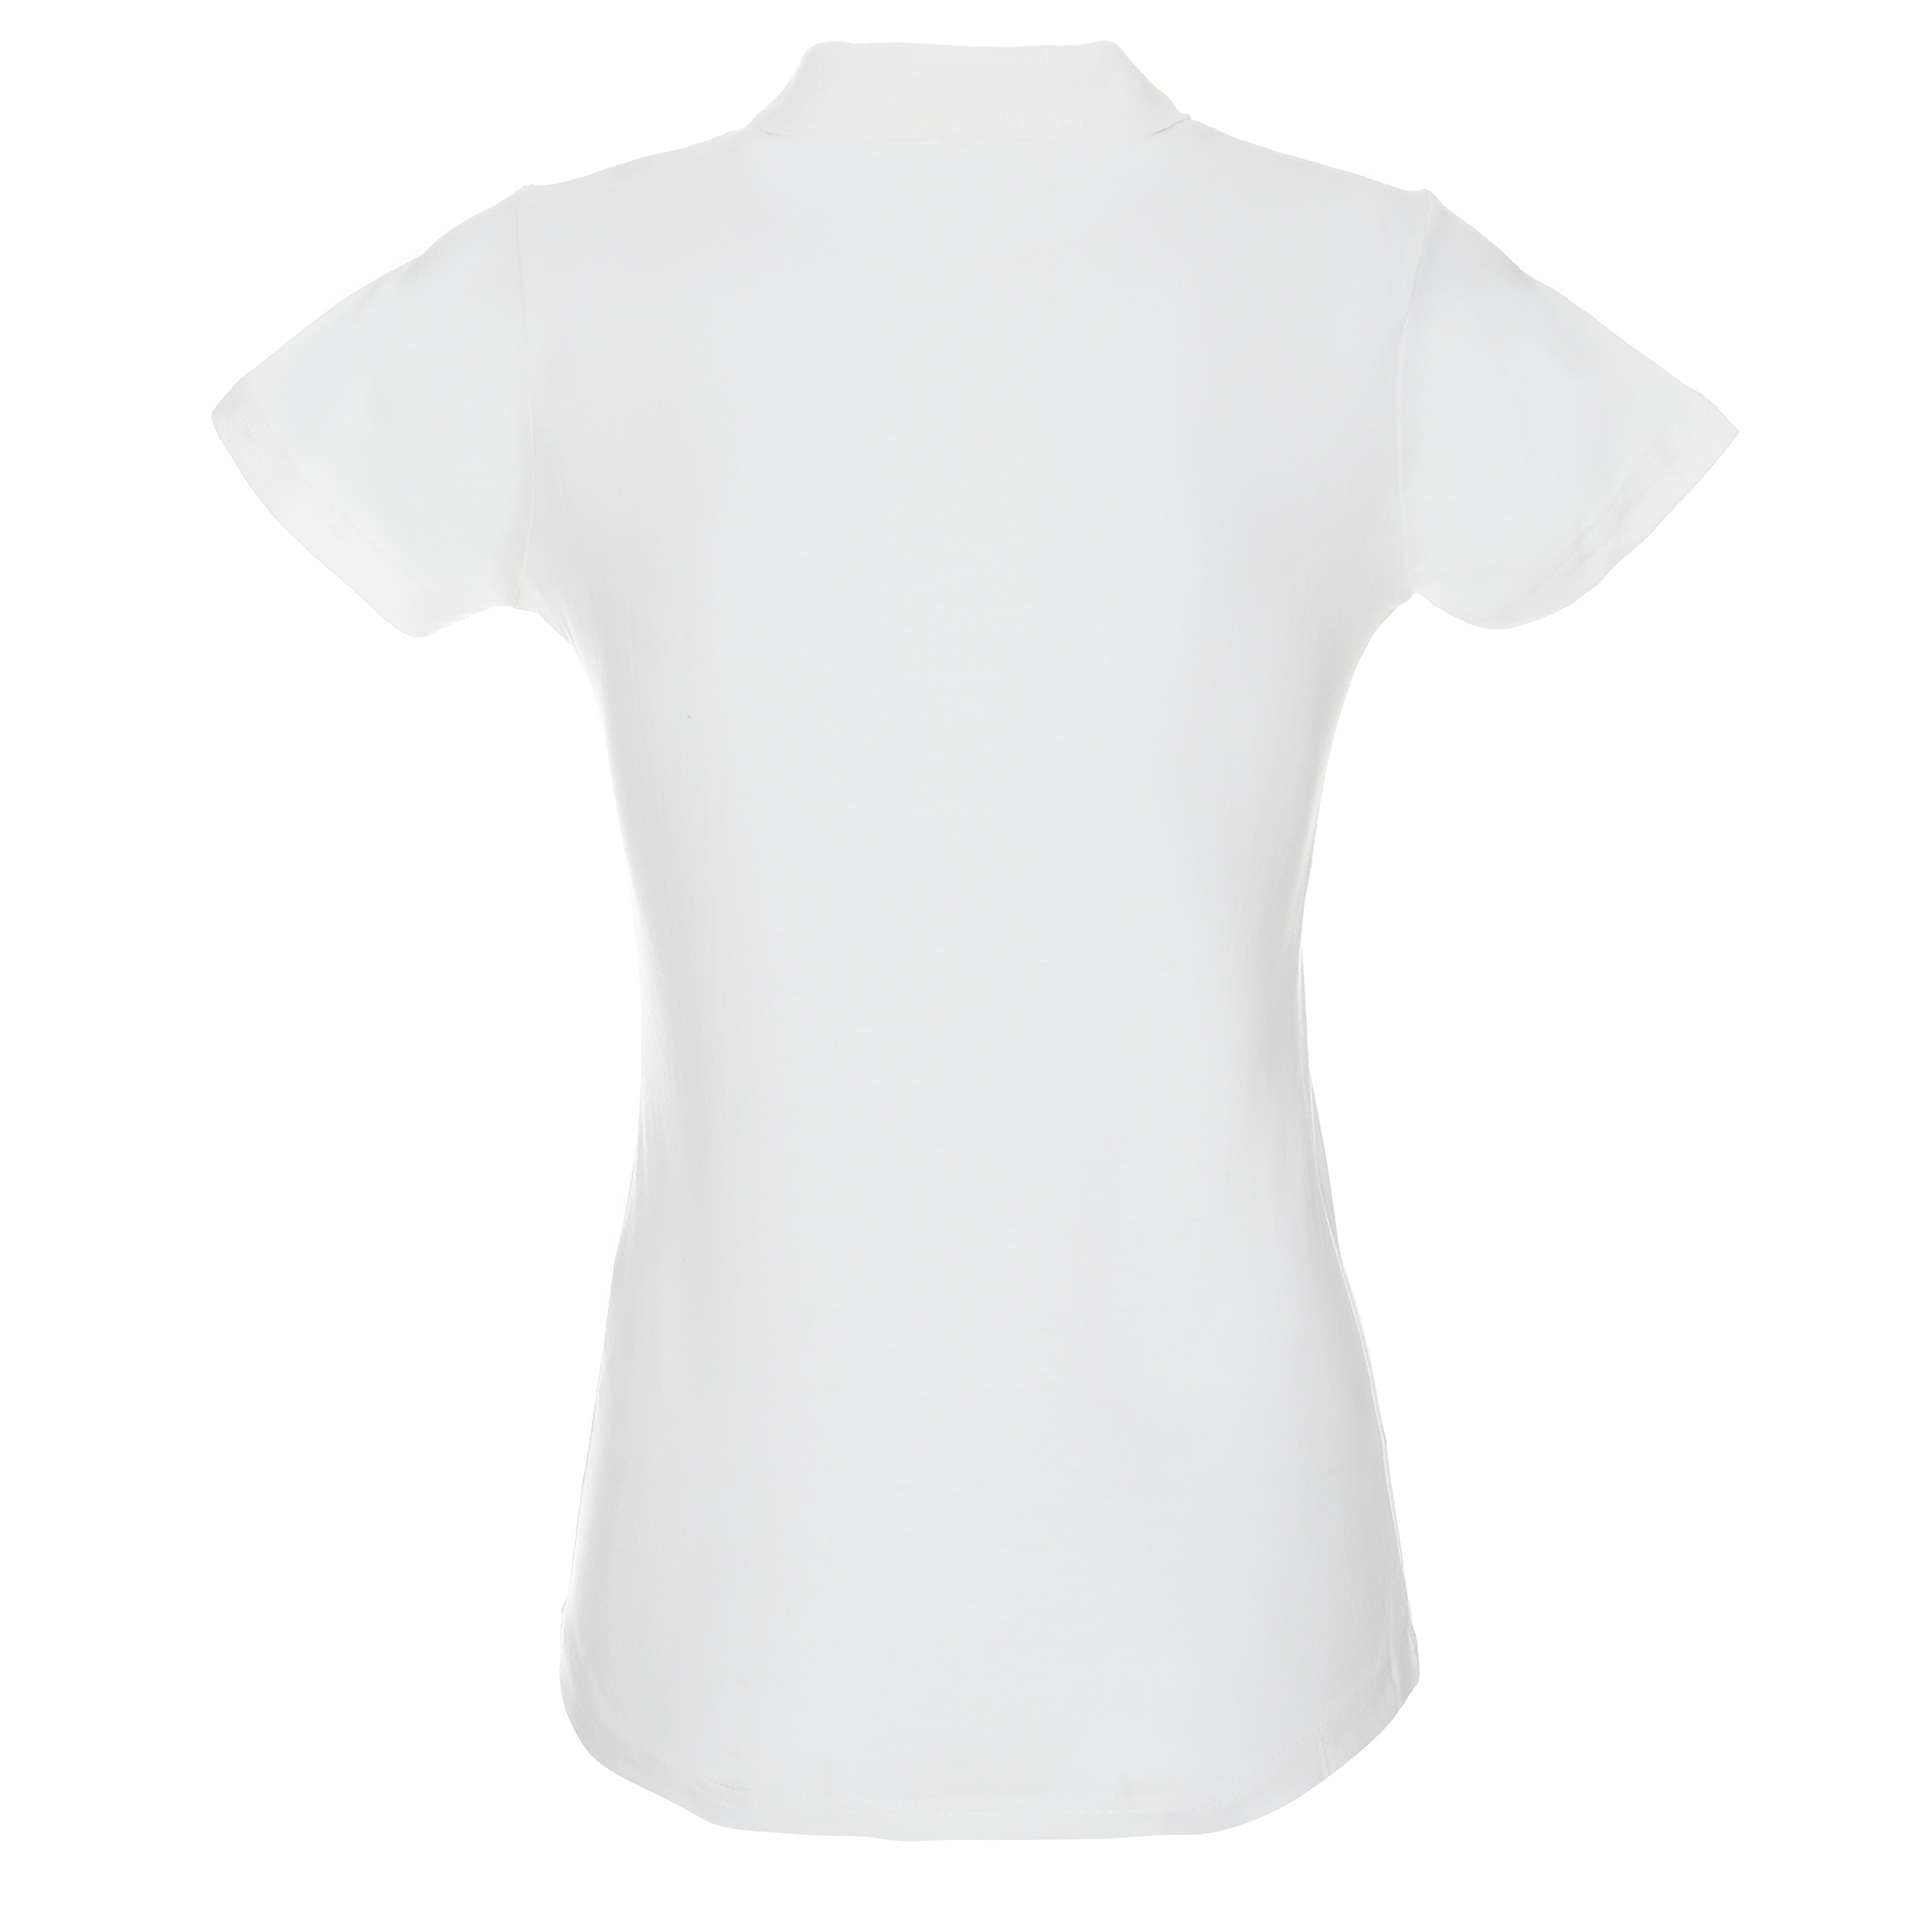 Koszulka damska Polo Geffer 450 - biała